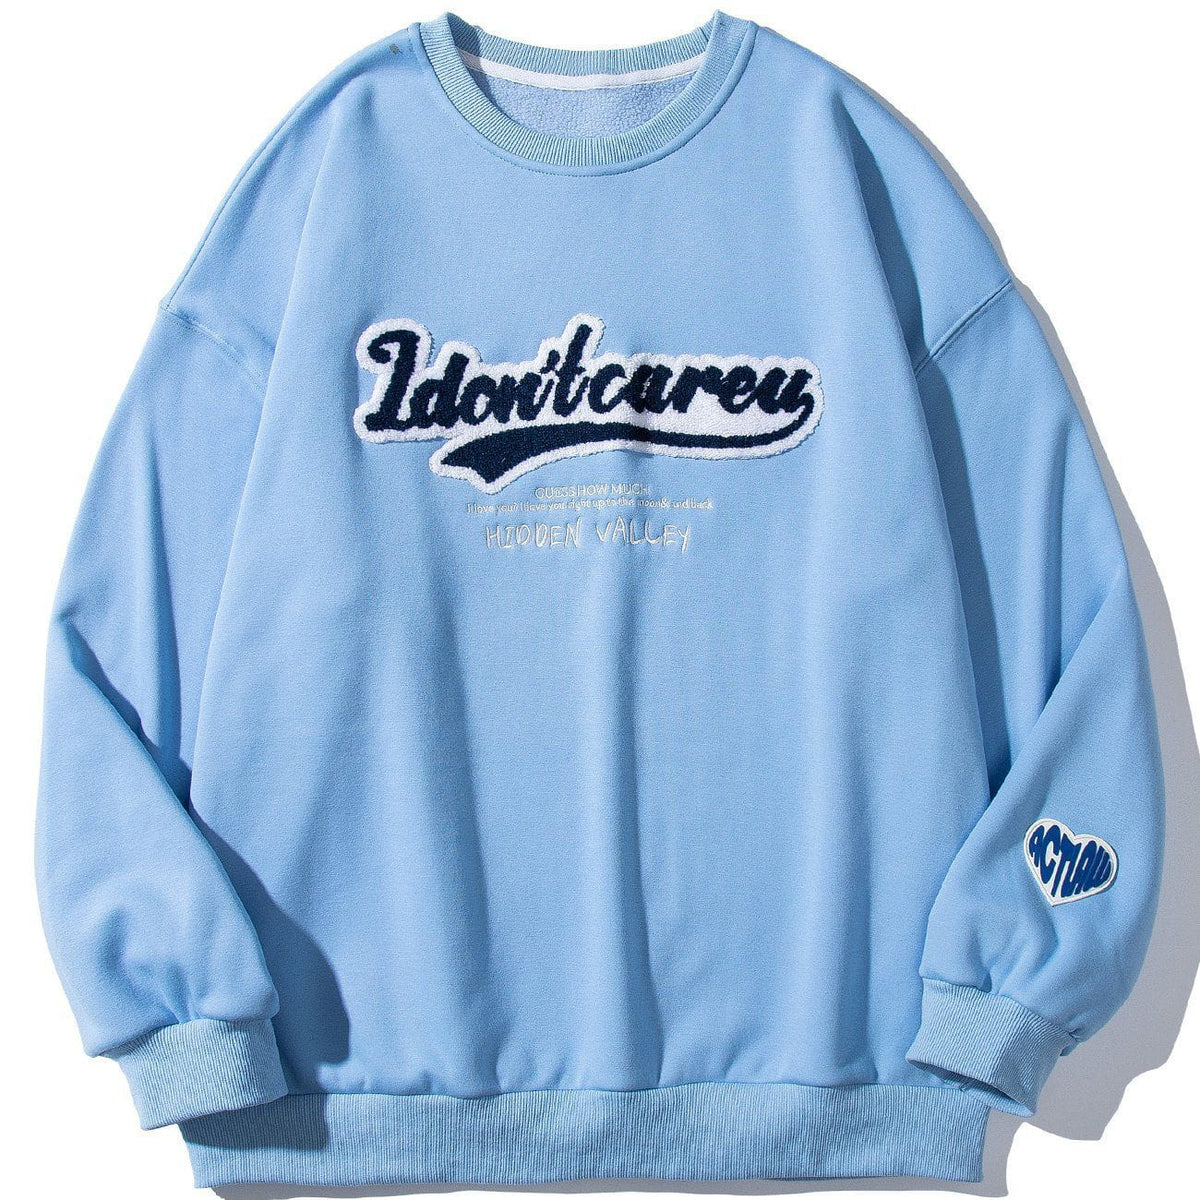 Eprezzy® - Letter Flocked Sweatshirt Streetwear Fashion - eprezzy.com